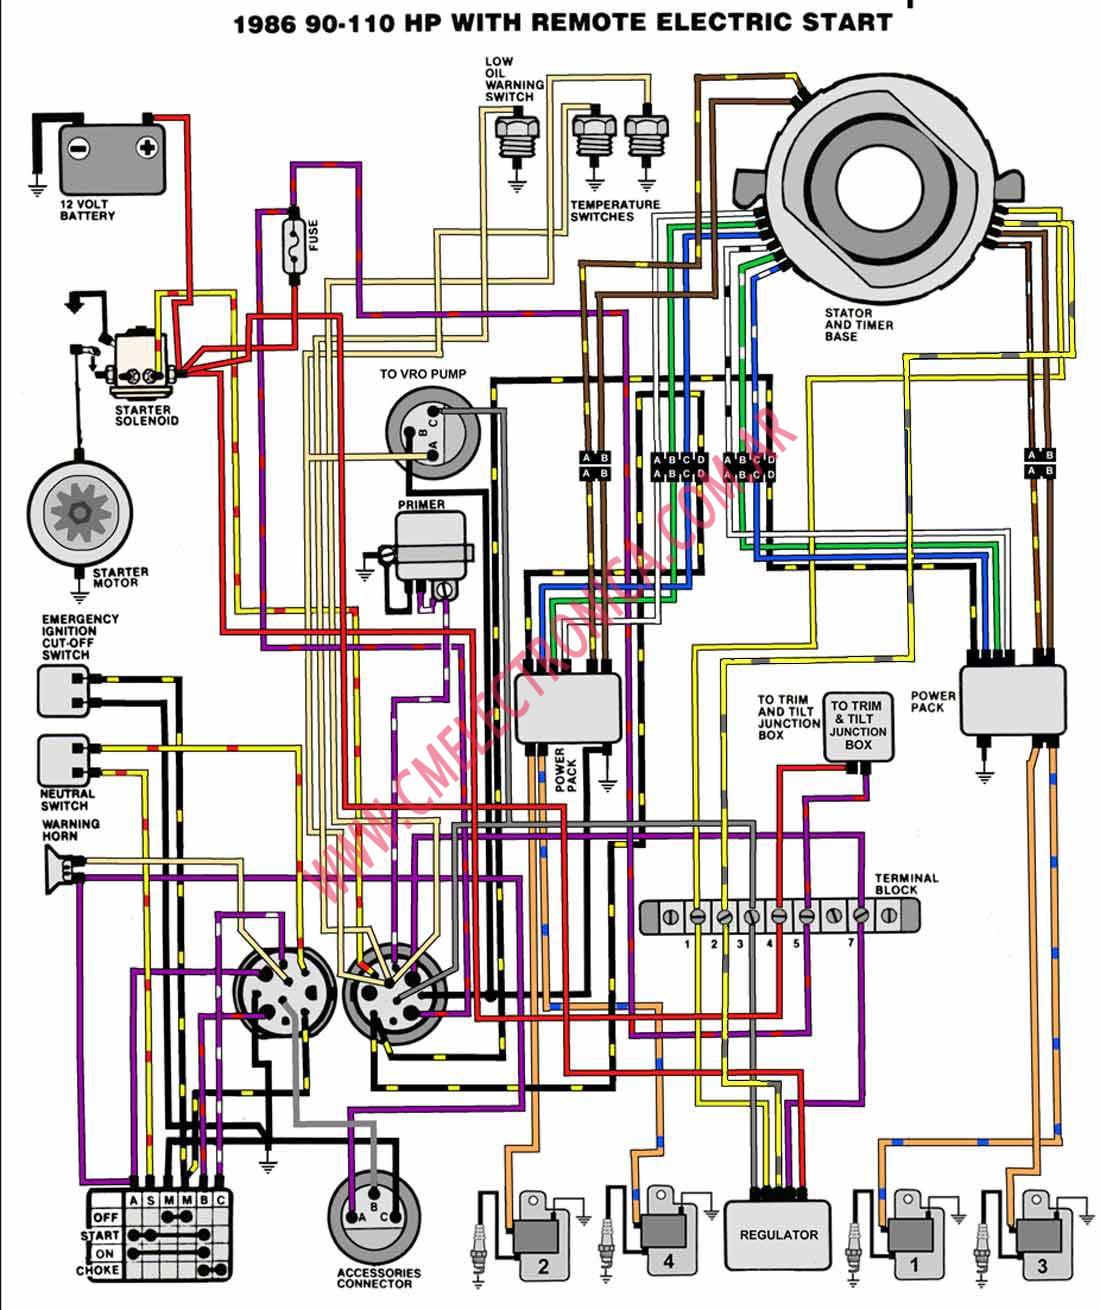 Wiring Diagram For Evinrude Etec 60 Hp 2008 Motor